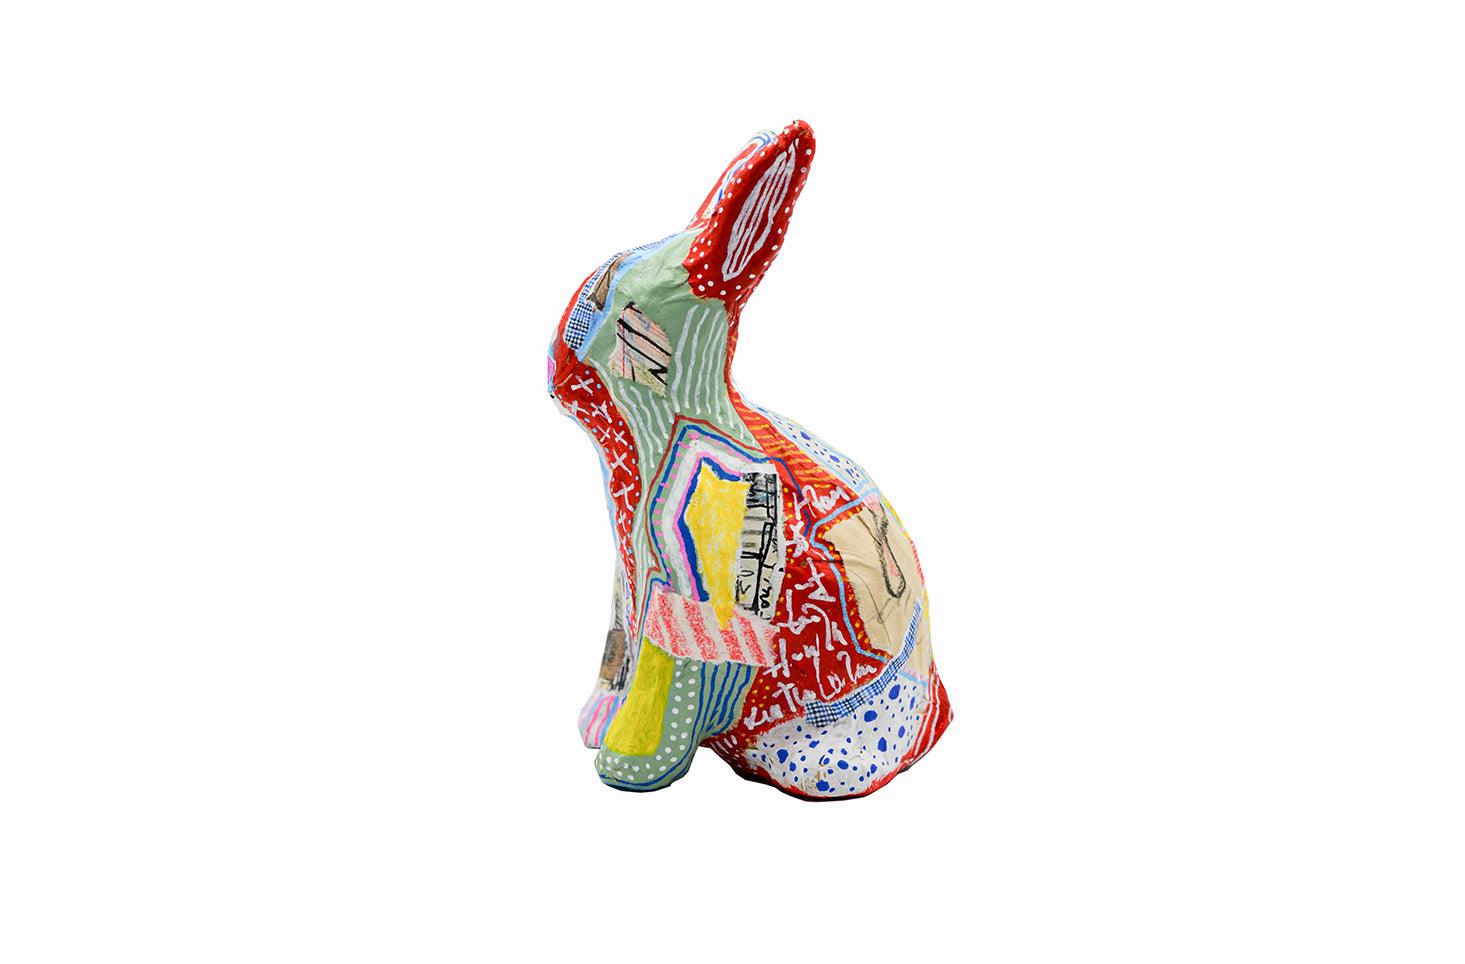 Red & Yellow Bunny Paper Mache Figure